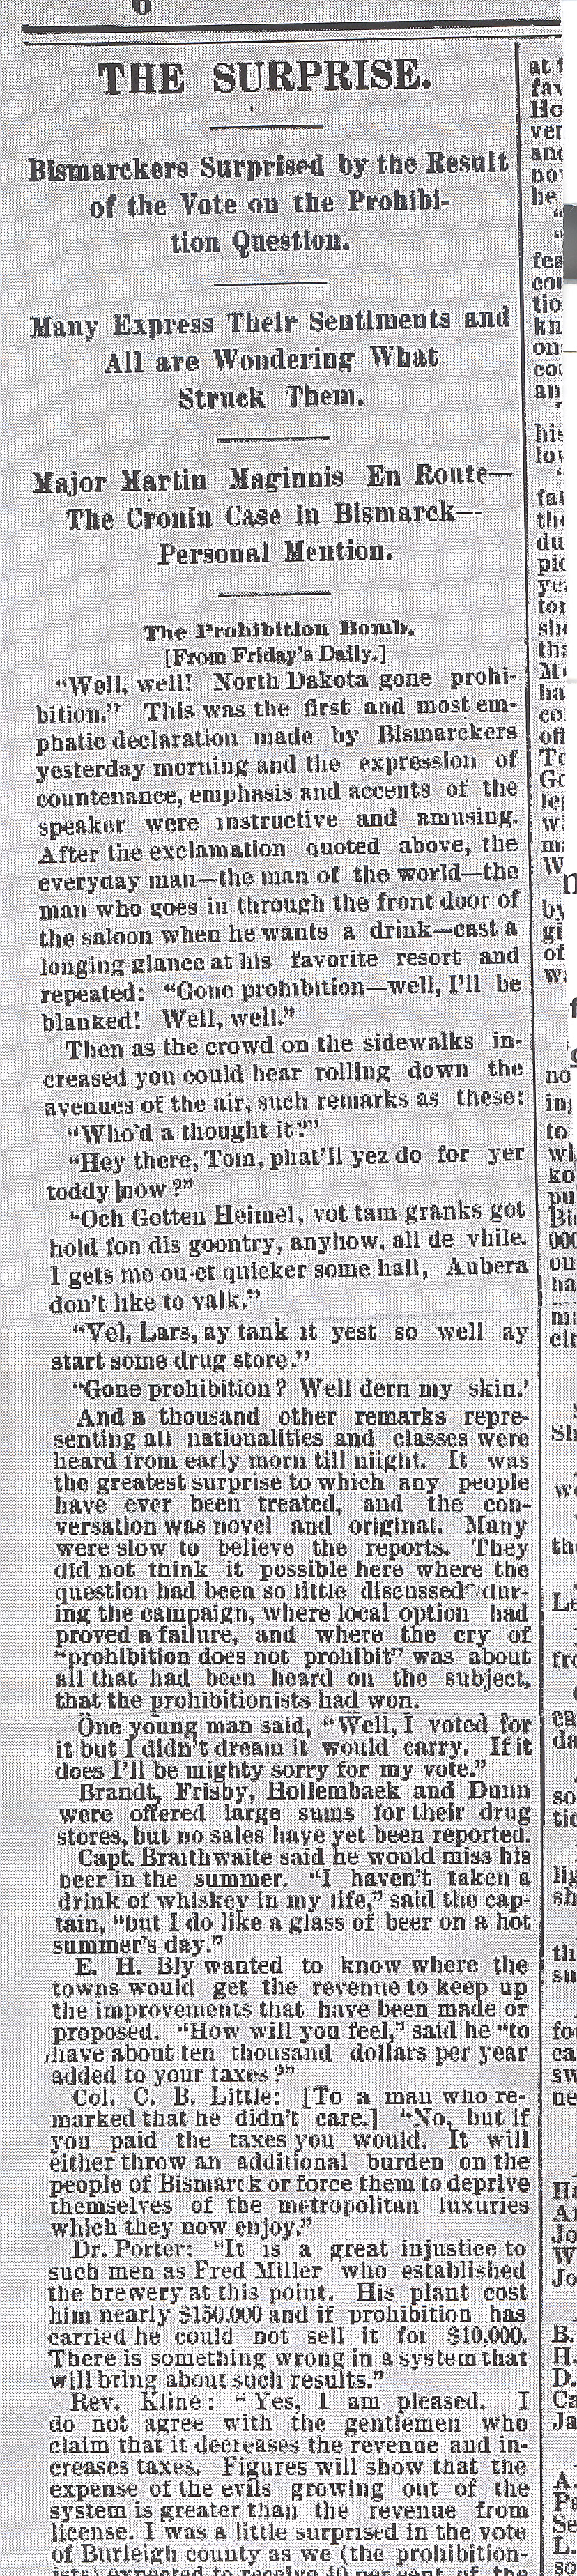 Prohibition article